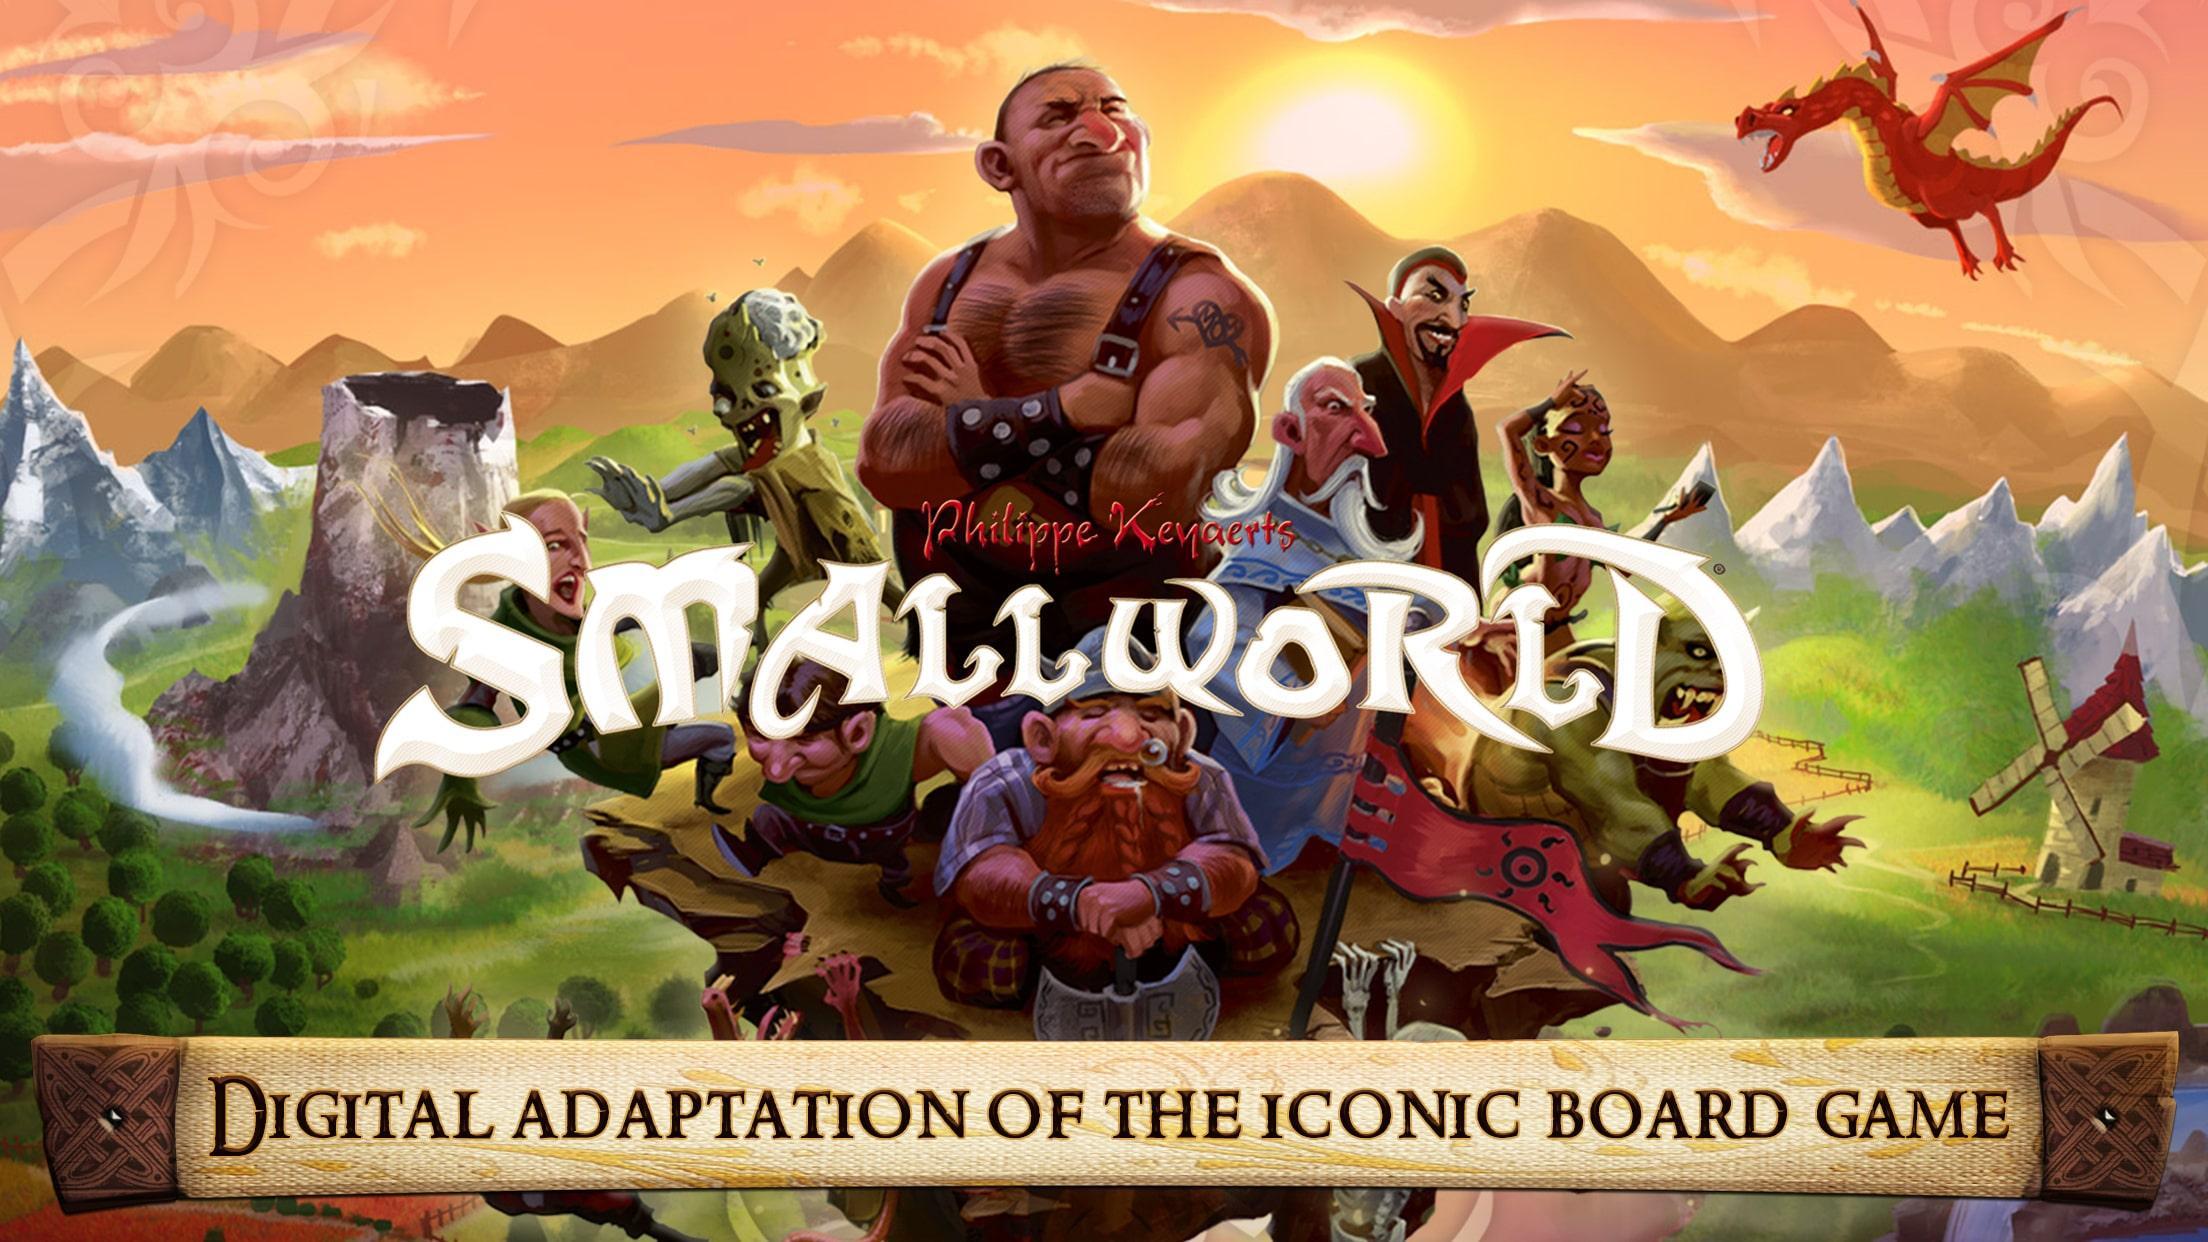 Screenshot of Small World: Civilizations & C